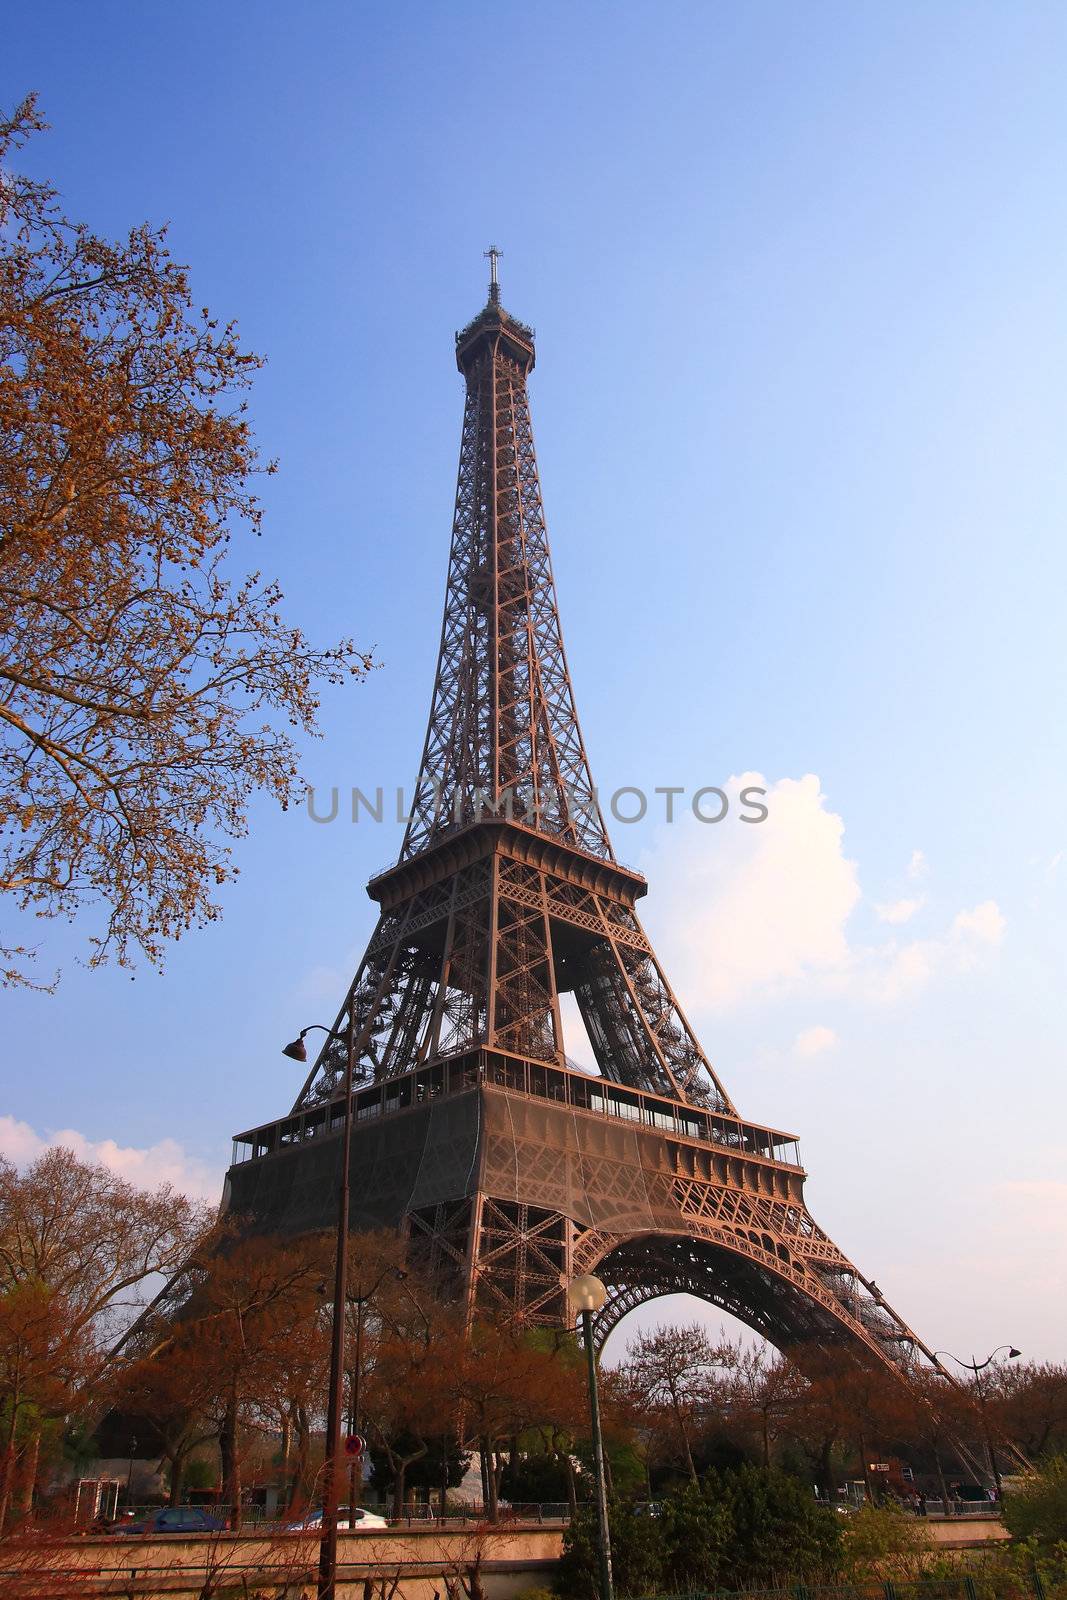 Eiffel tower Paris France by vichie81